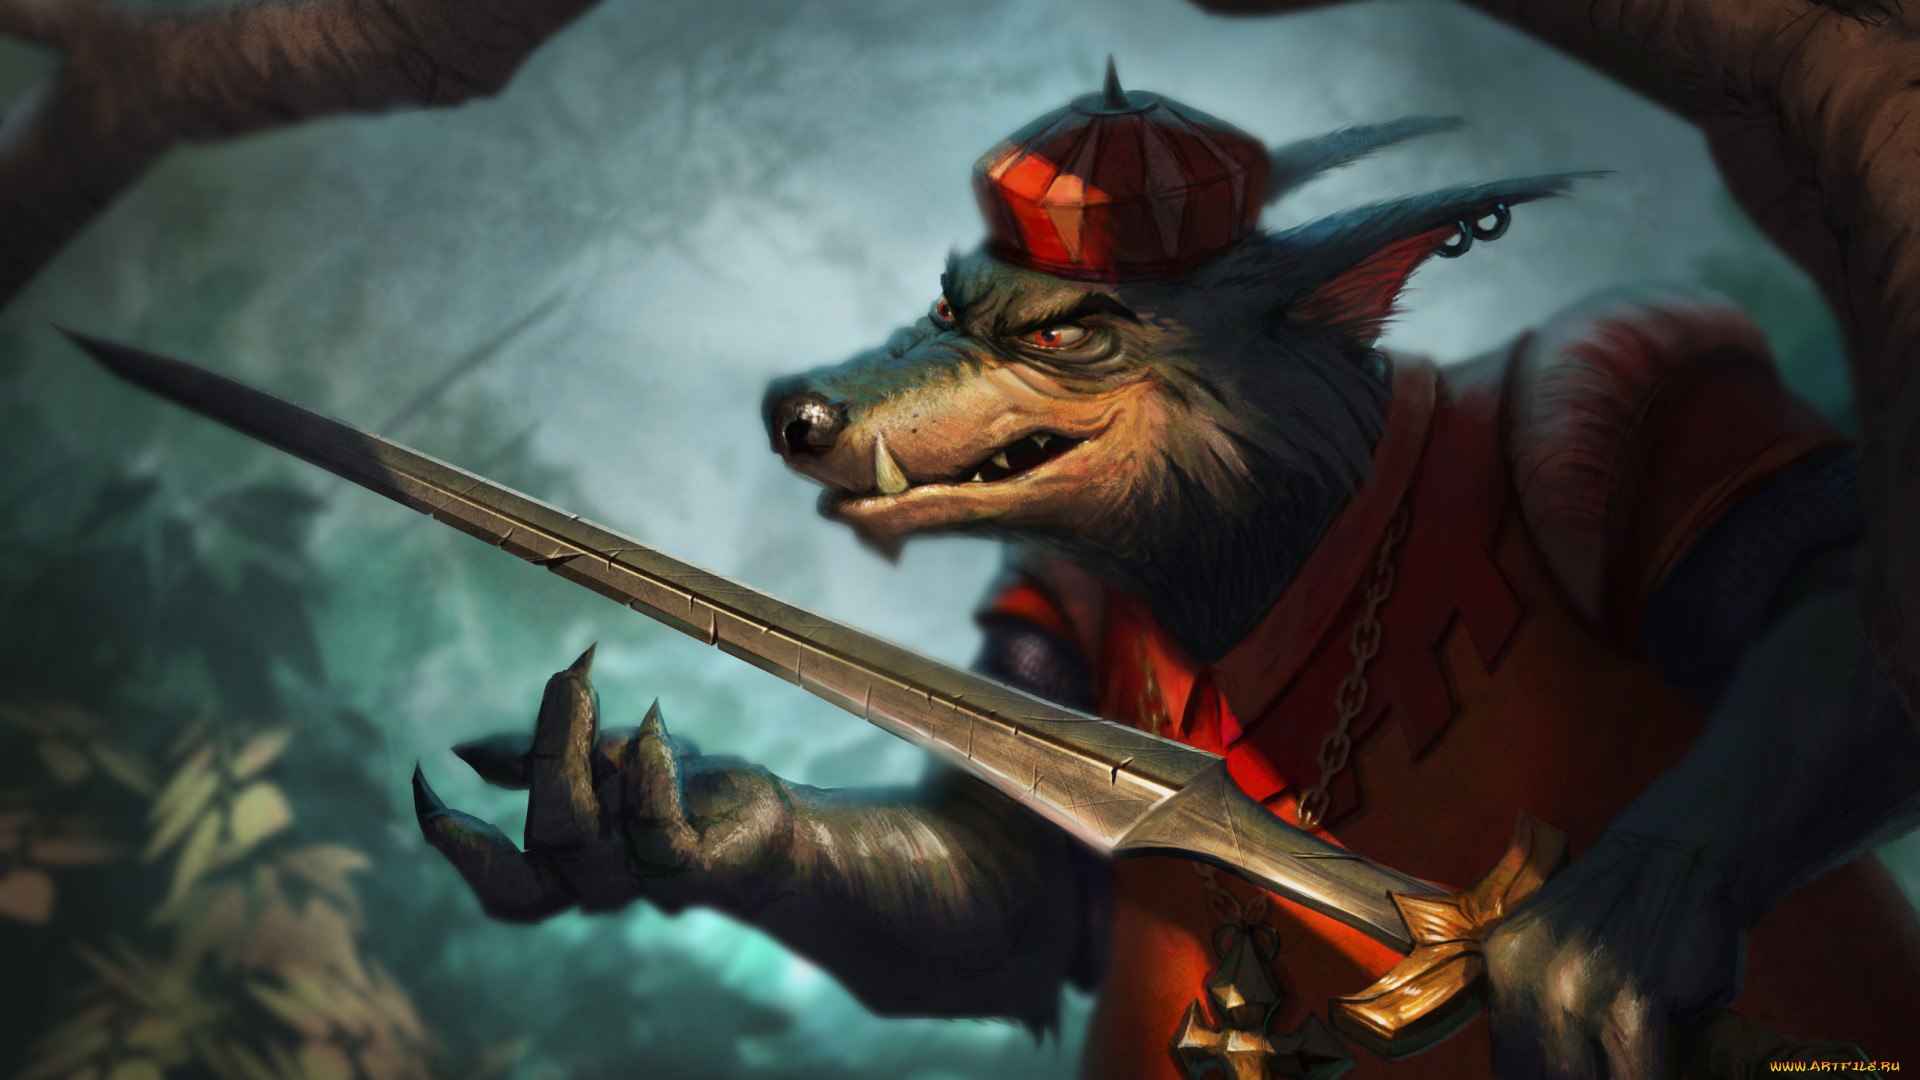 General 1920x1080 fantasy art sword creature artwork wolf red eyes hat claws Robin Hood Anthro digital art watermarked